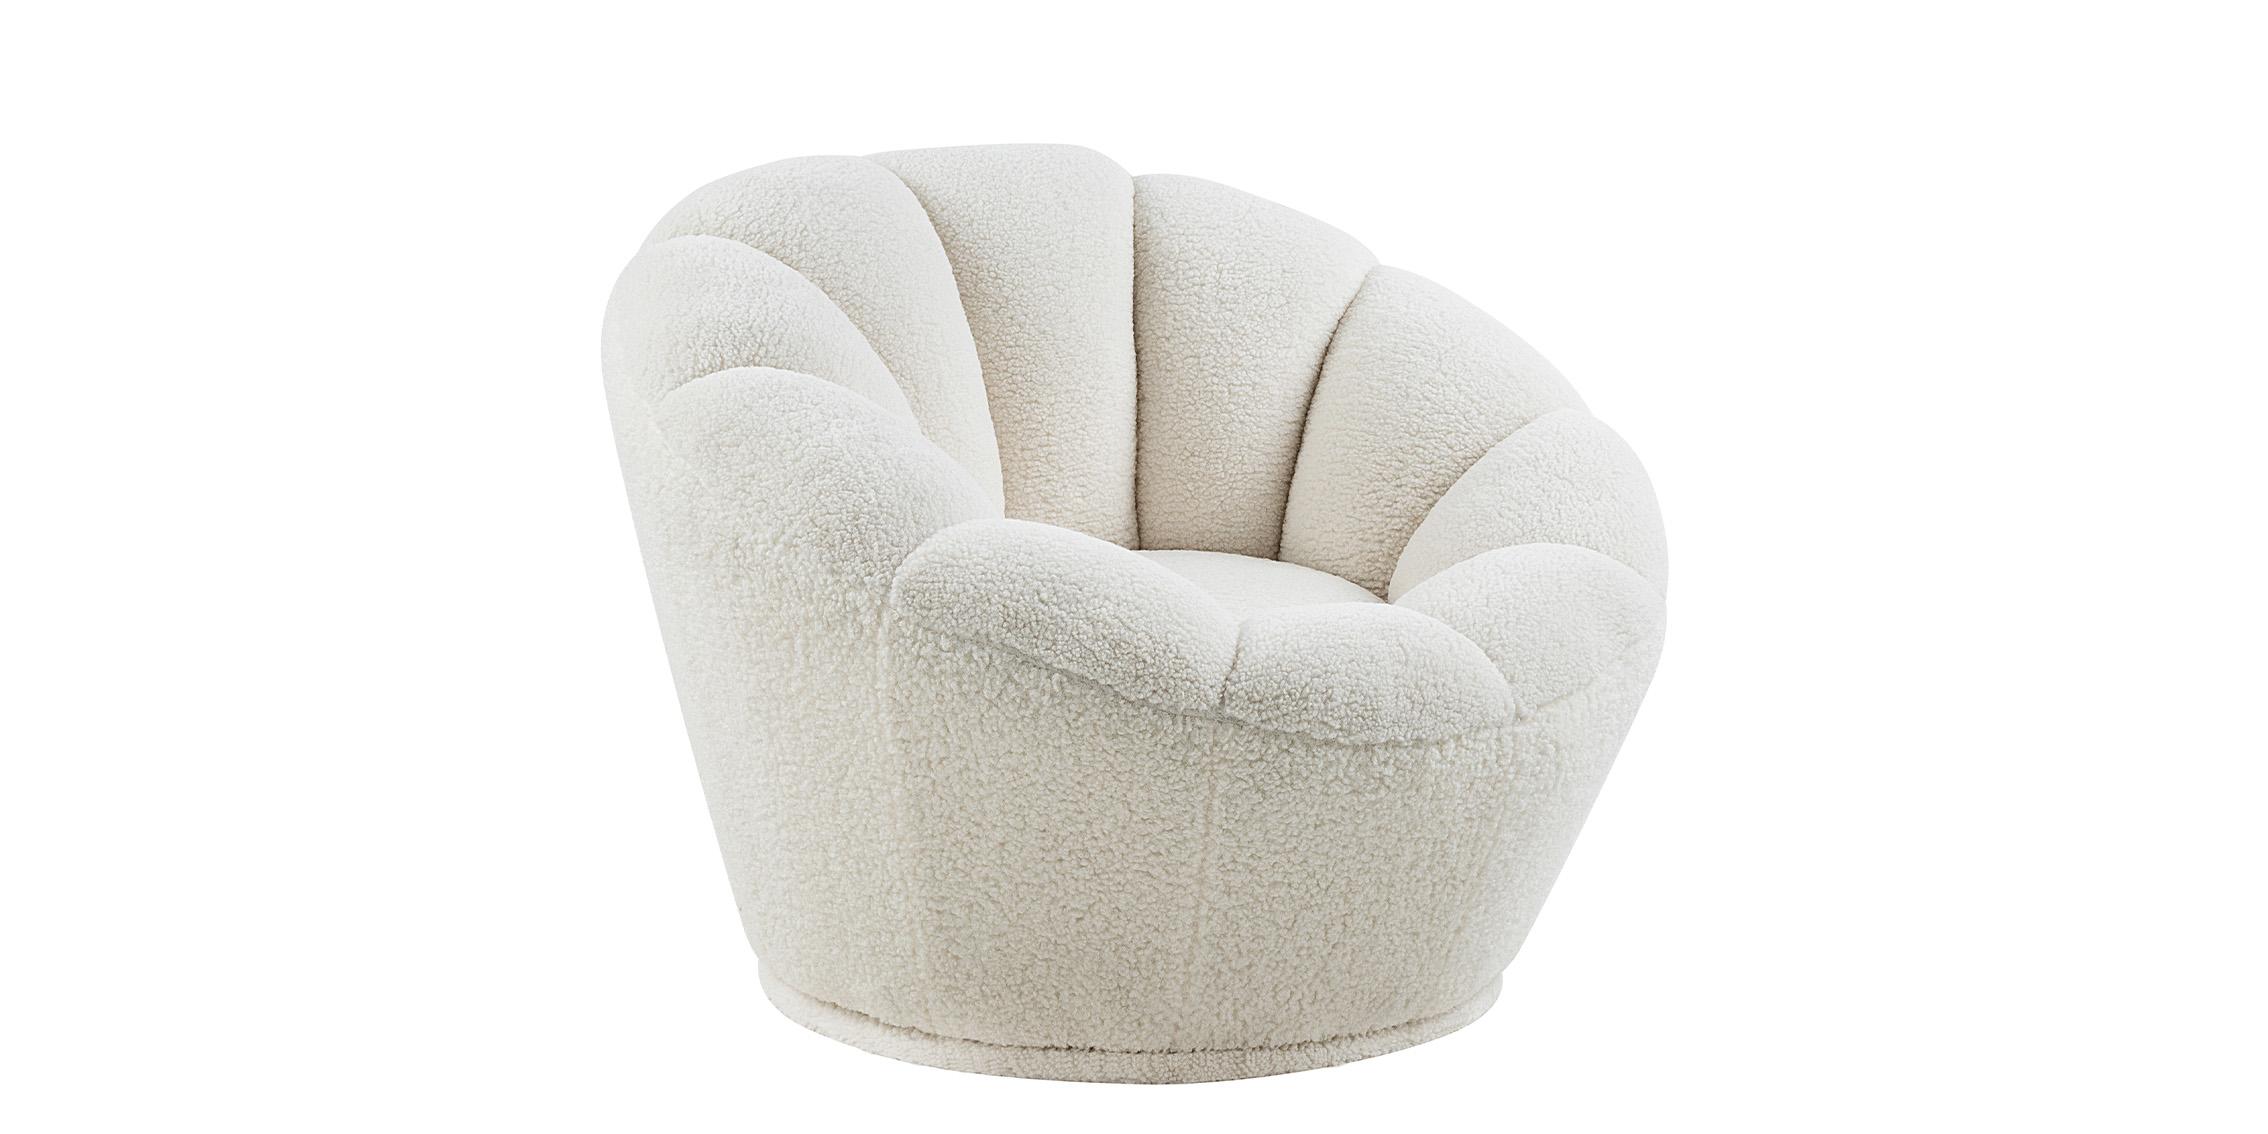 Contemporary, Modern Accent Chair DREAM 514Fur 514Fur in White 